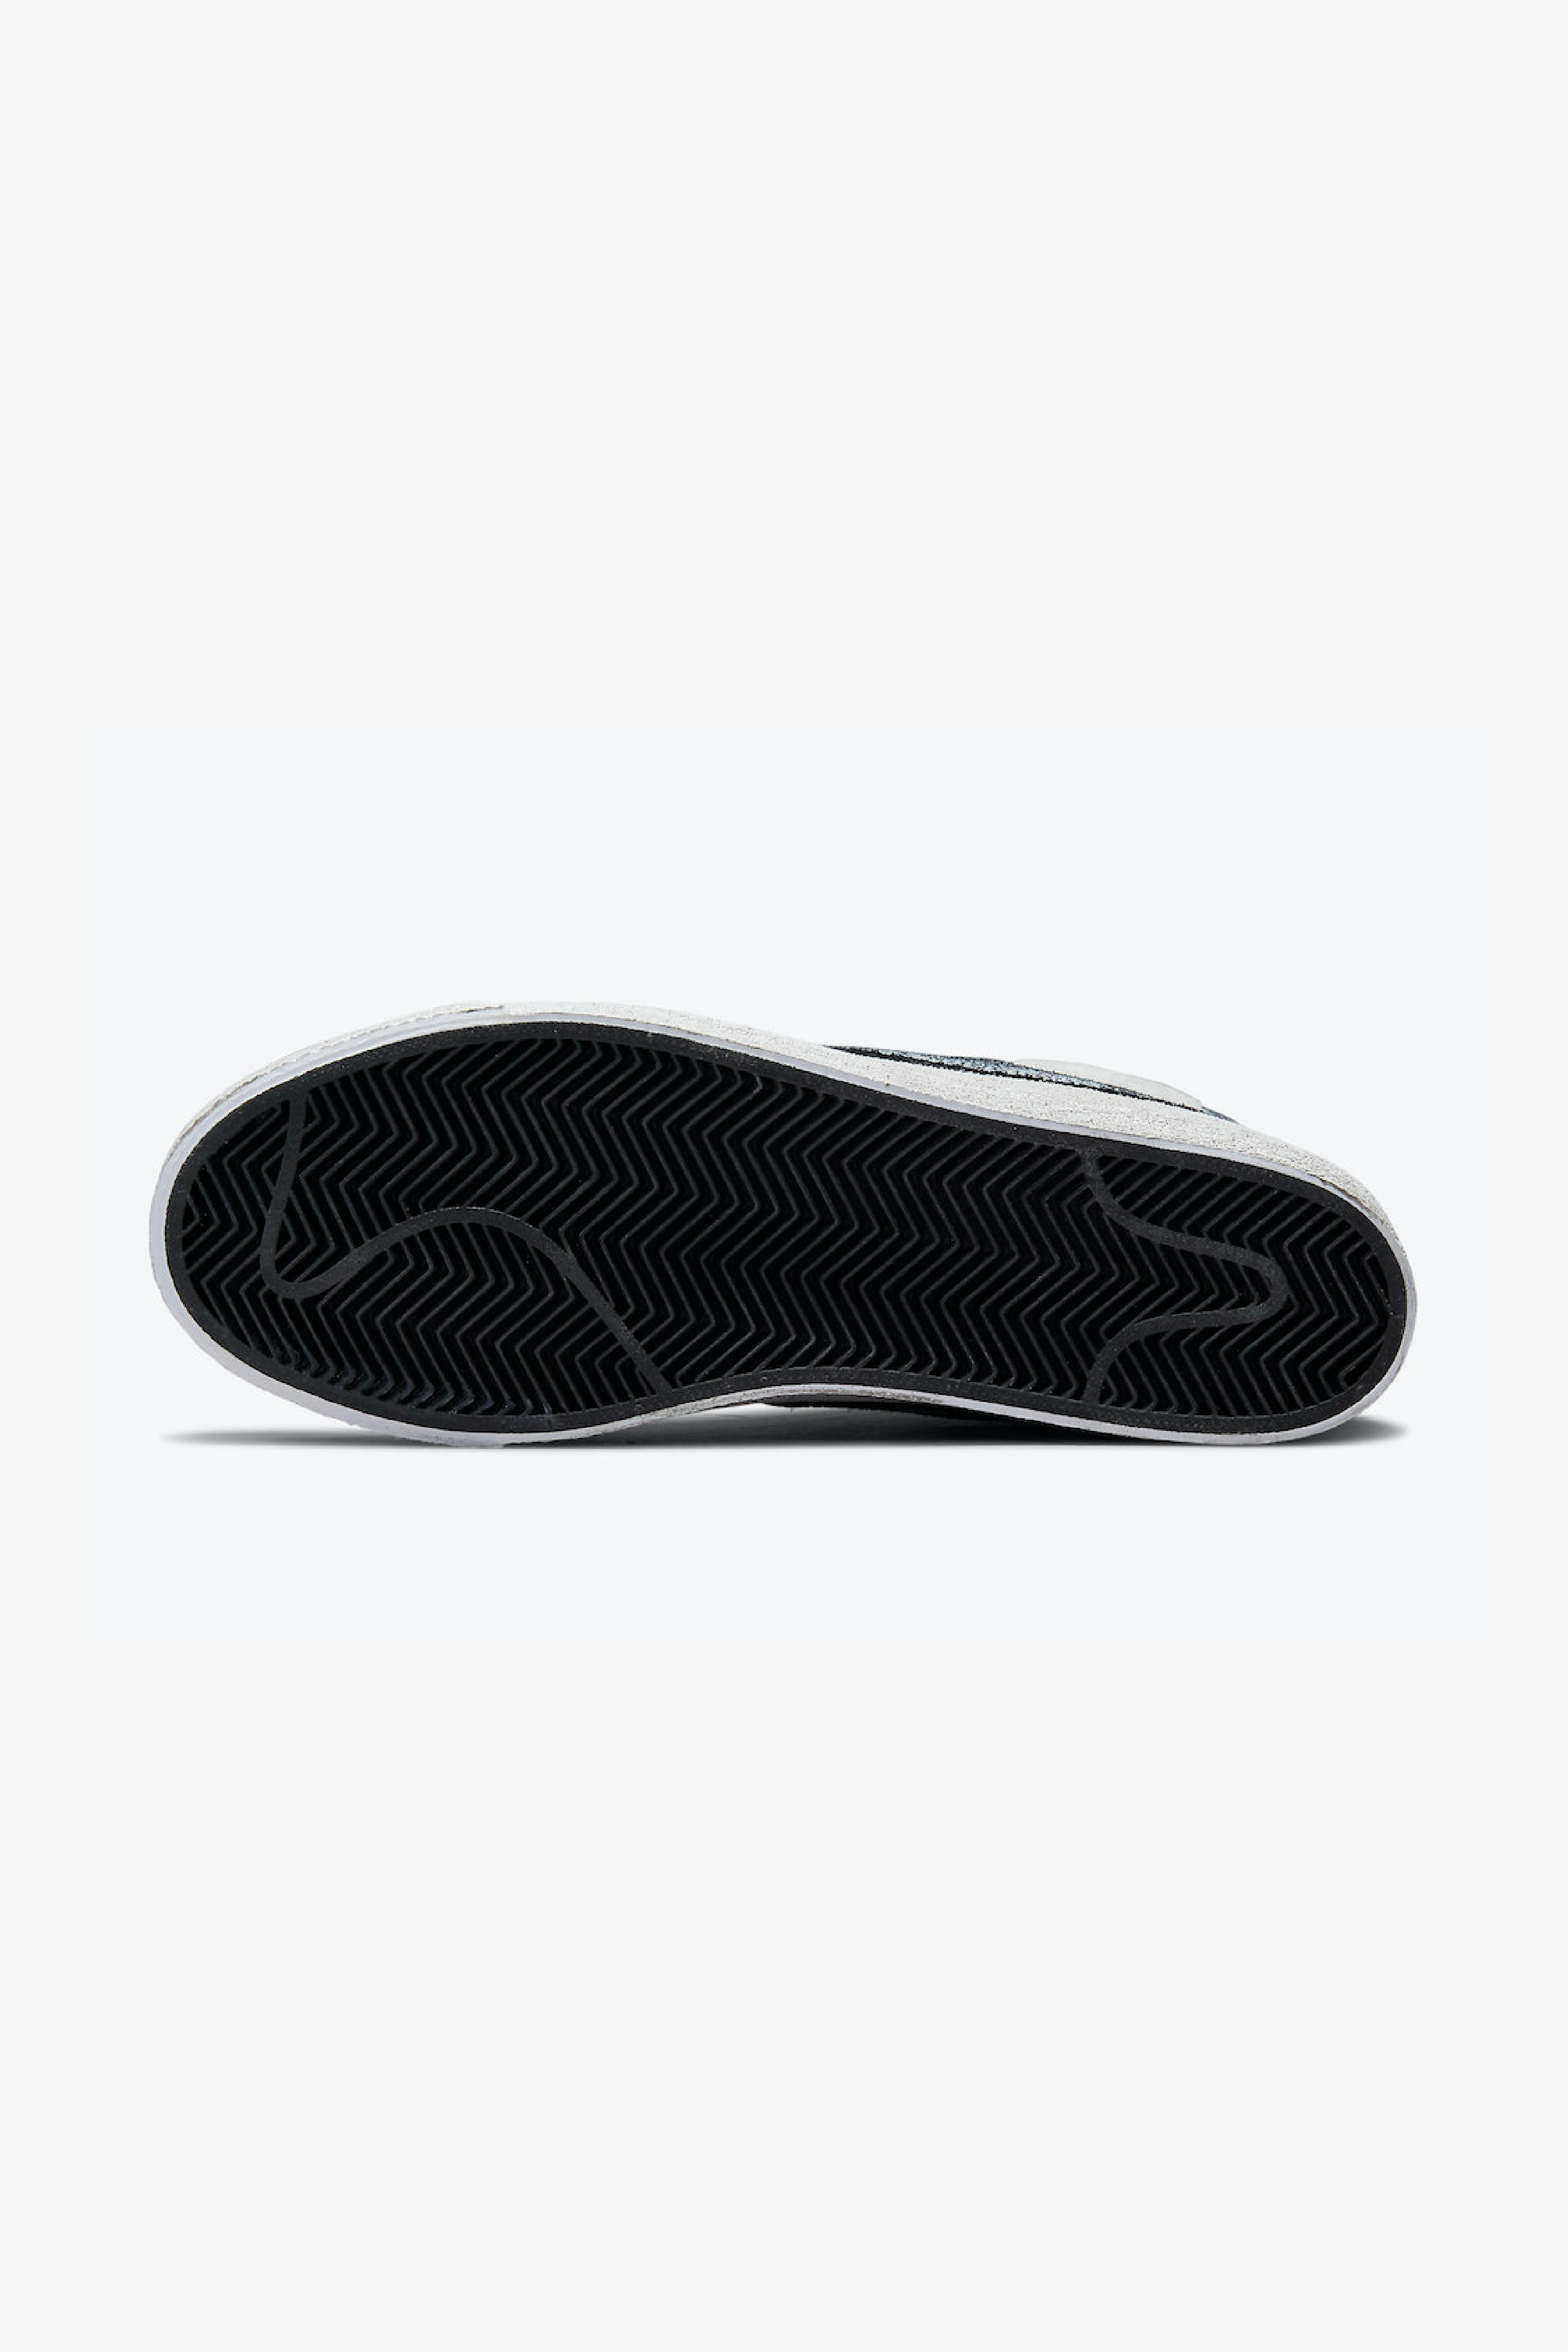 Selectshop FRAME - NIKE SB Nike SB Zoom Blazer Mid PRM "Faded Sail Black" Footwear Dubai